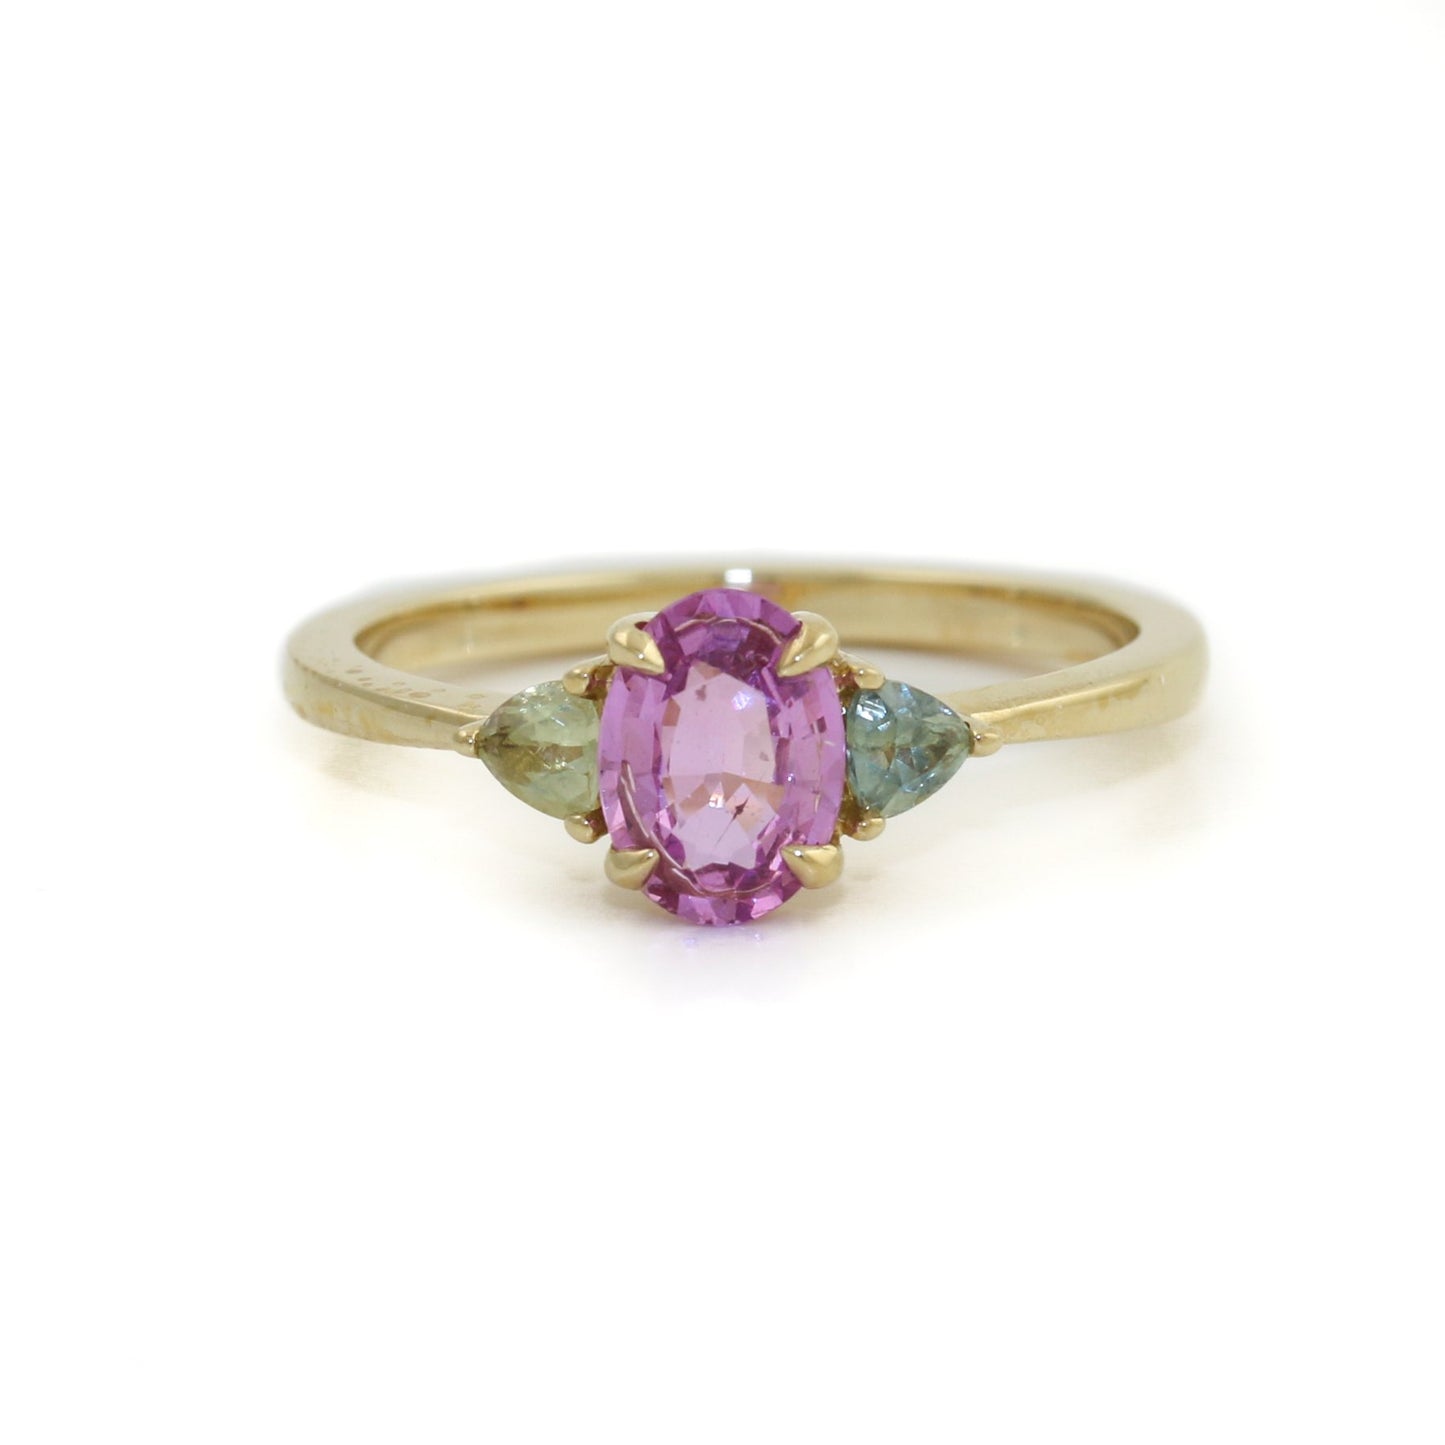 14K Gold Pink & Teal Sapphire Ring - Kingdom Jewelry